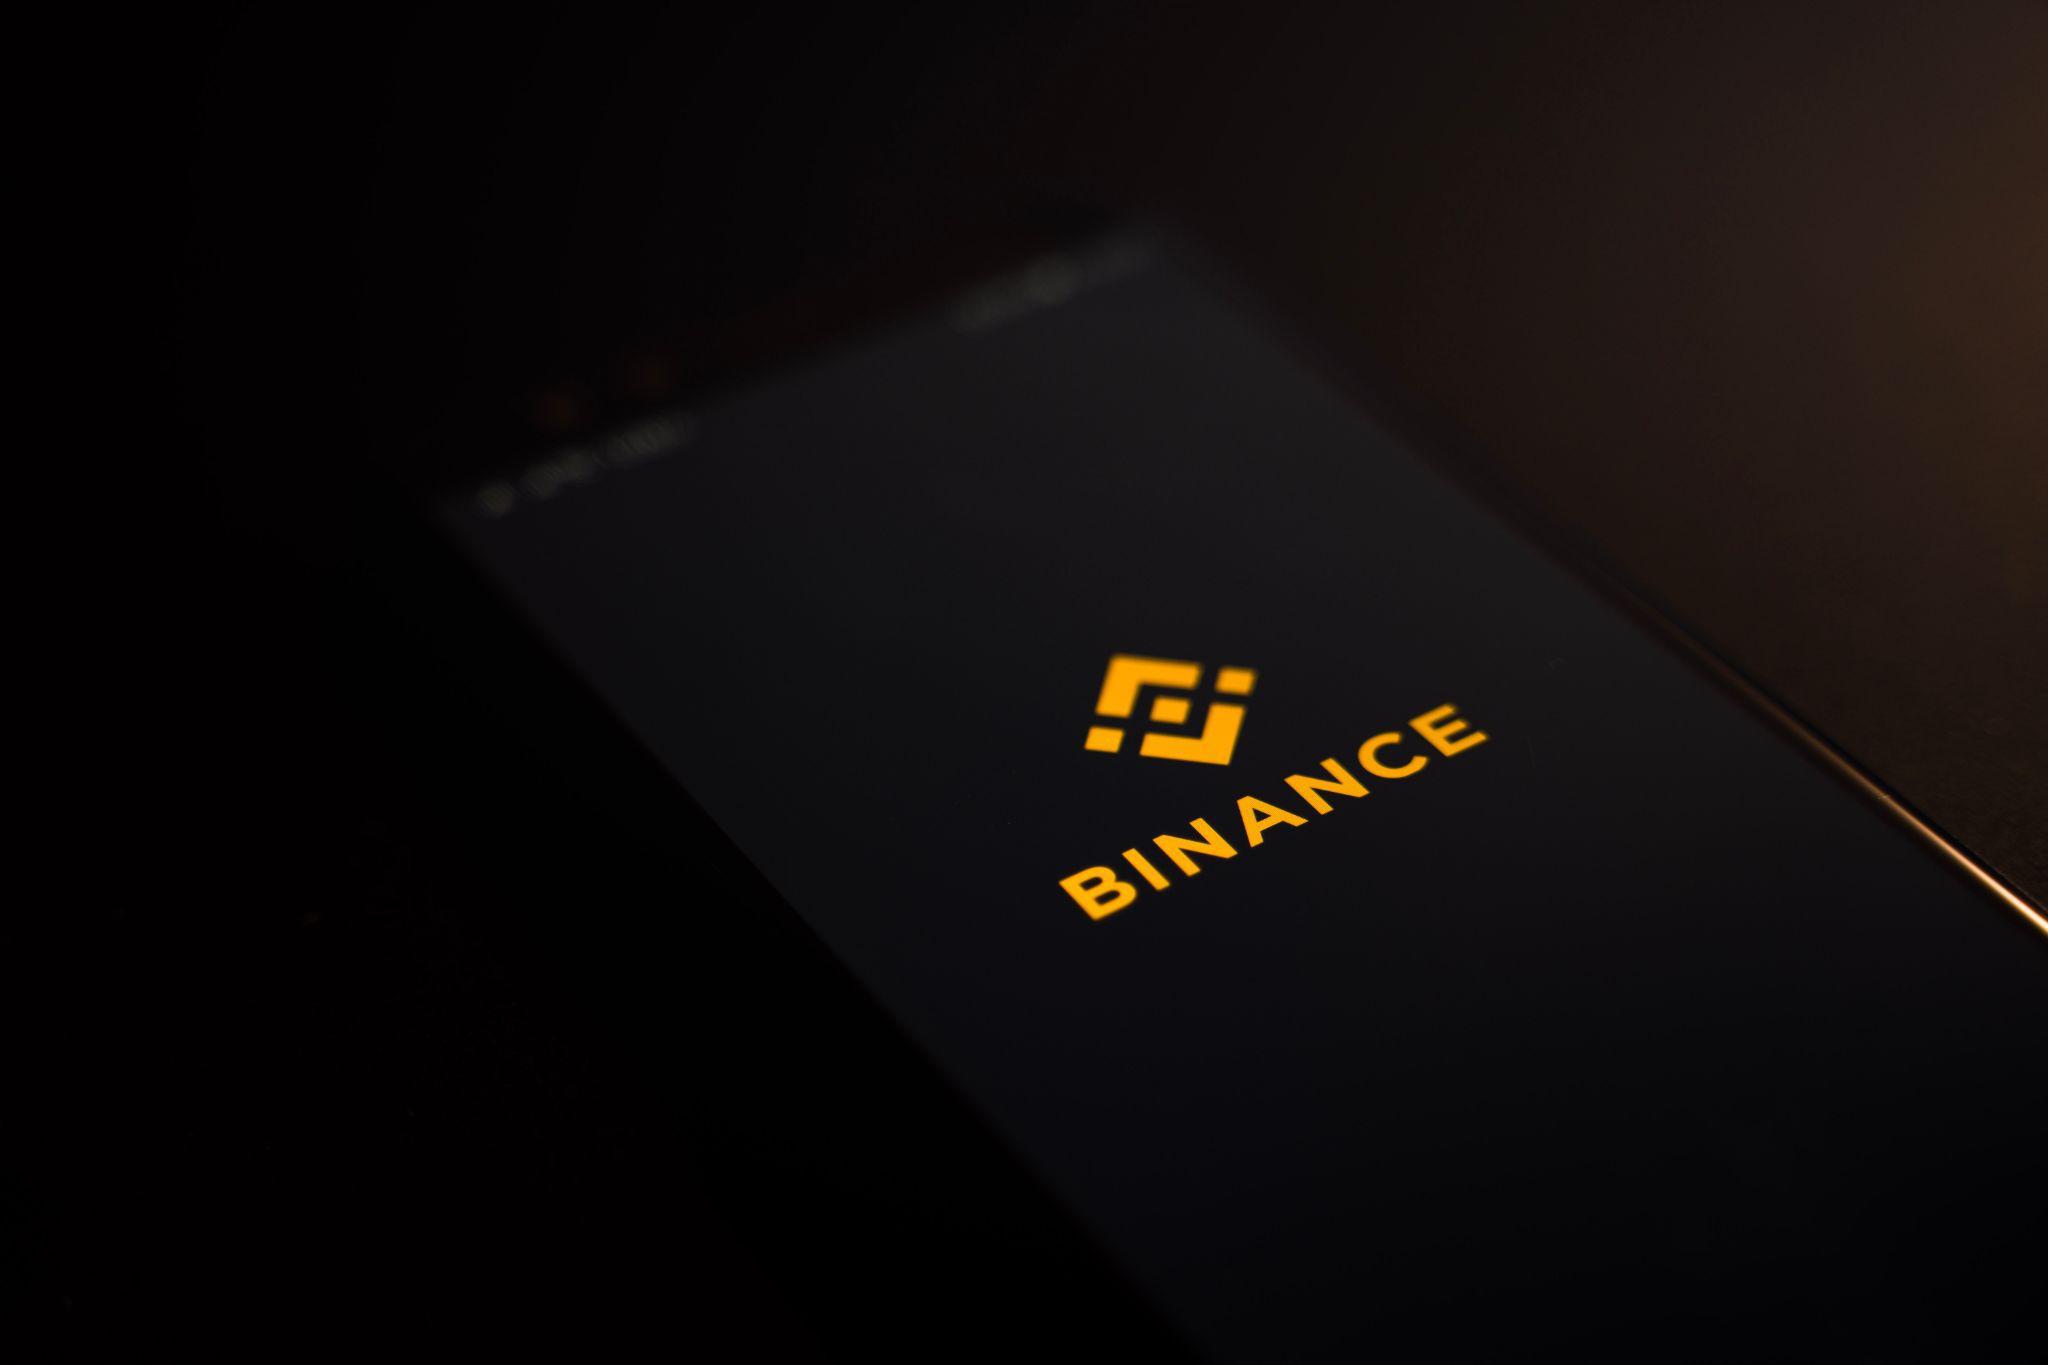 Image of Binance app on a smartphone